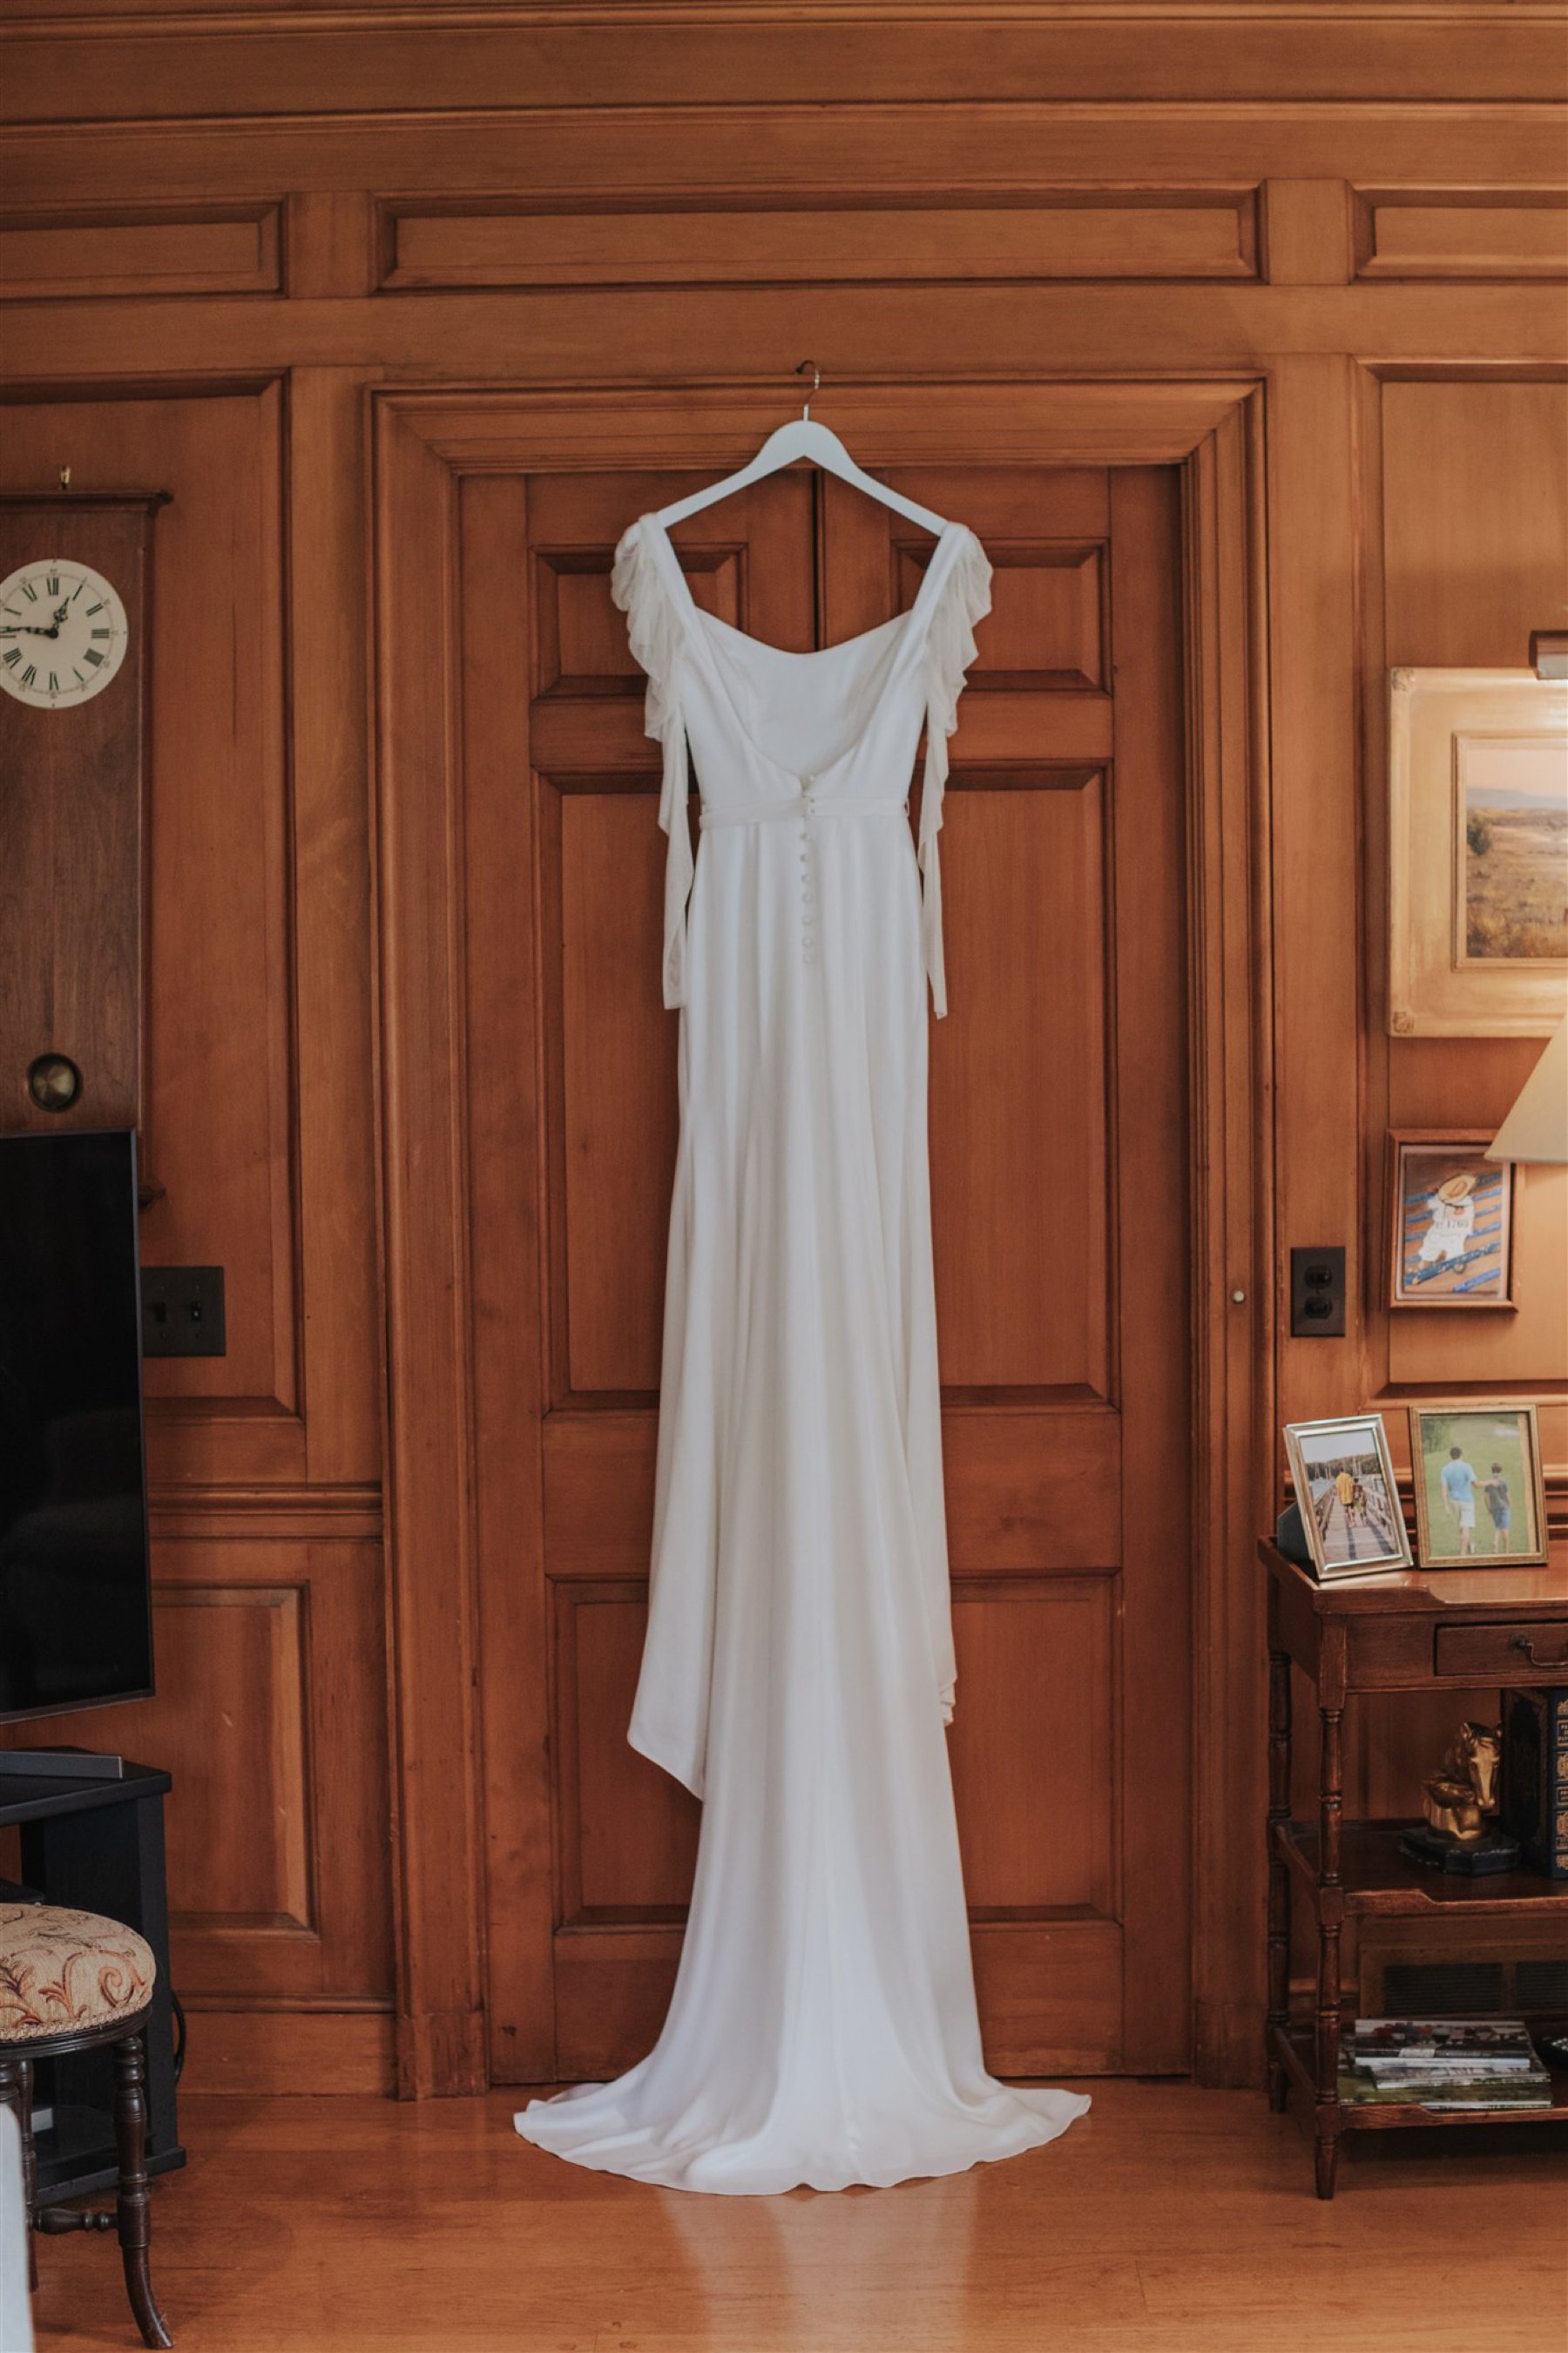 Wedding dress hanging on a doorframe